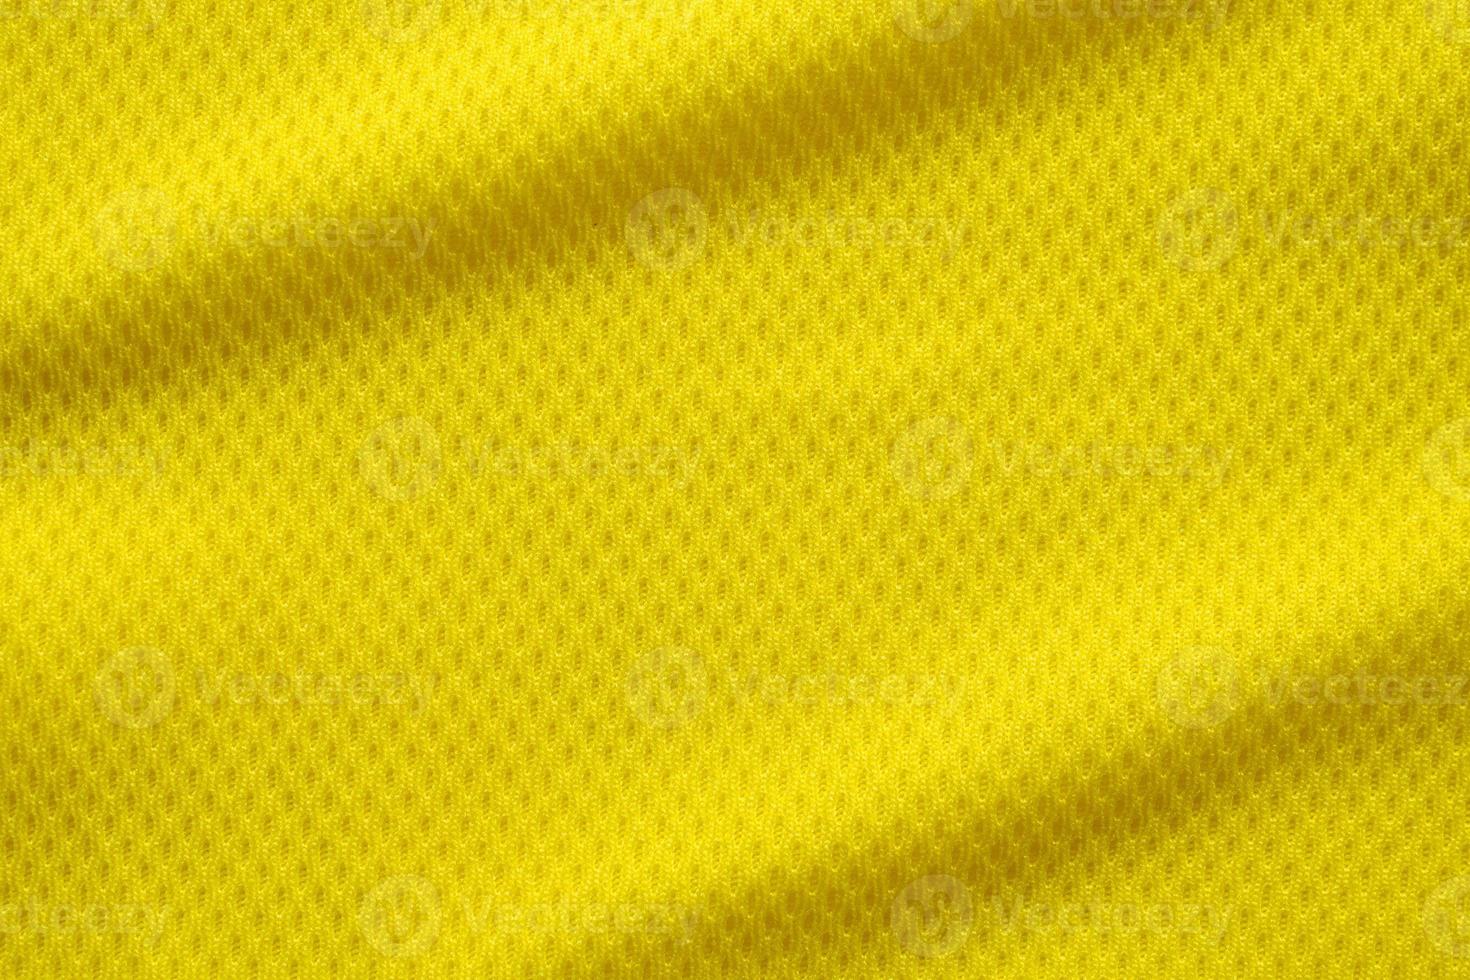 gele kleur voetbaltrui kleding stof textuur sportkleding achtergrond, close-up foto